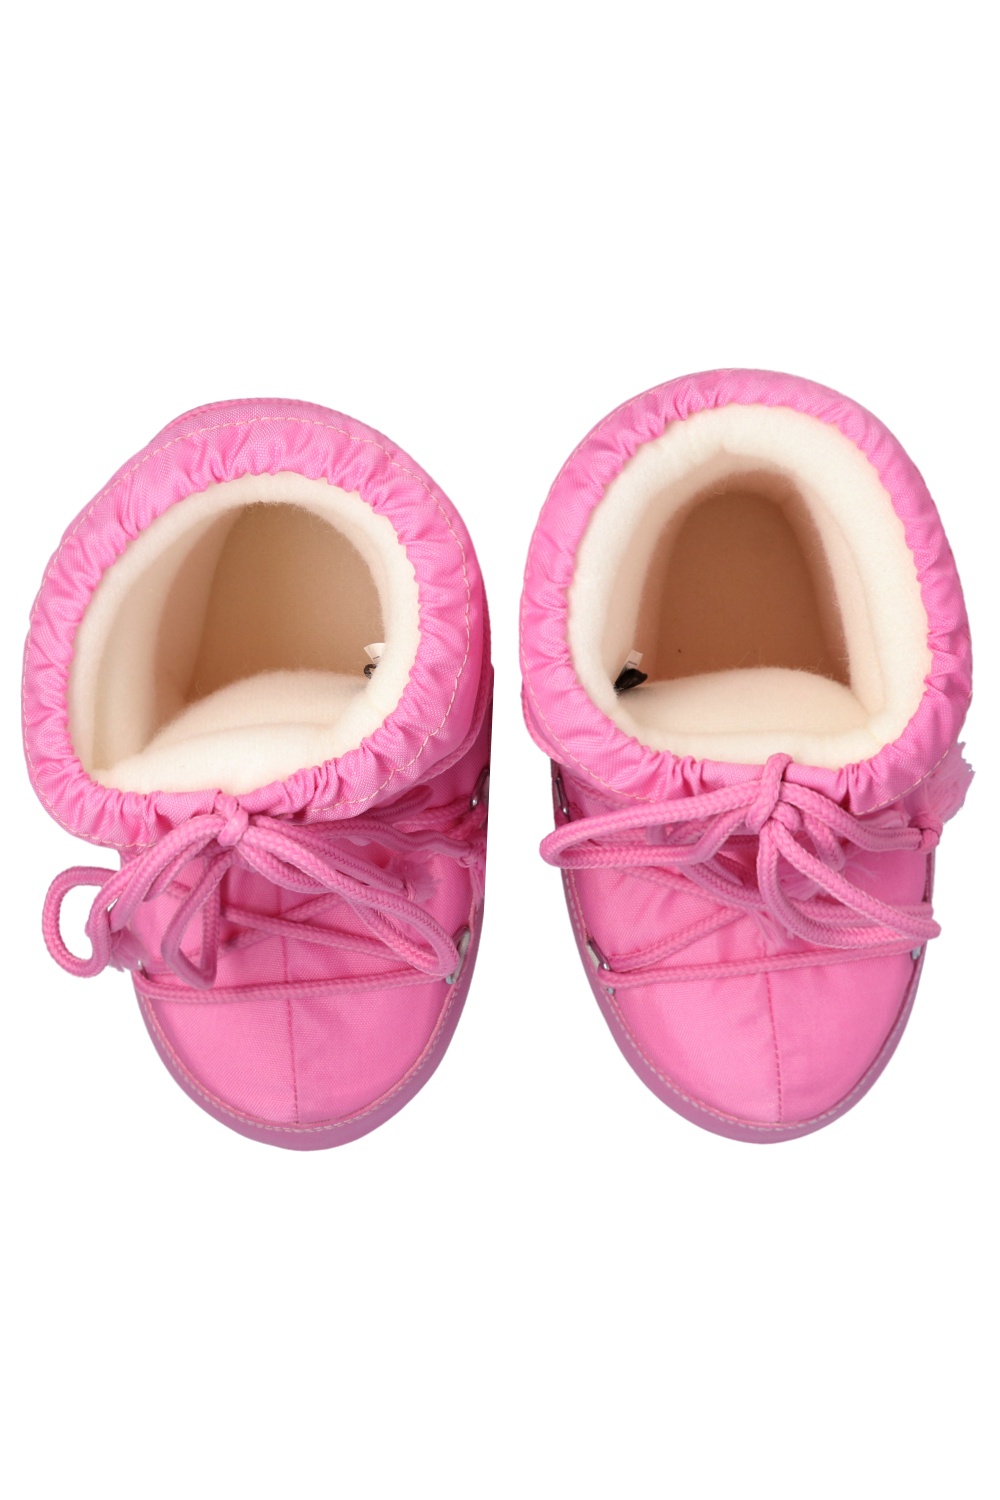 Chandelier flat sandals ‘Classic Nylon’ snow boots